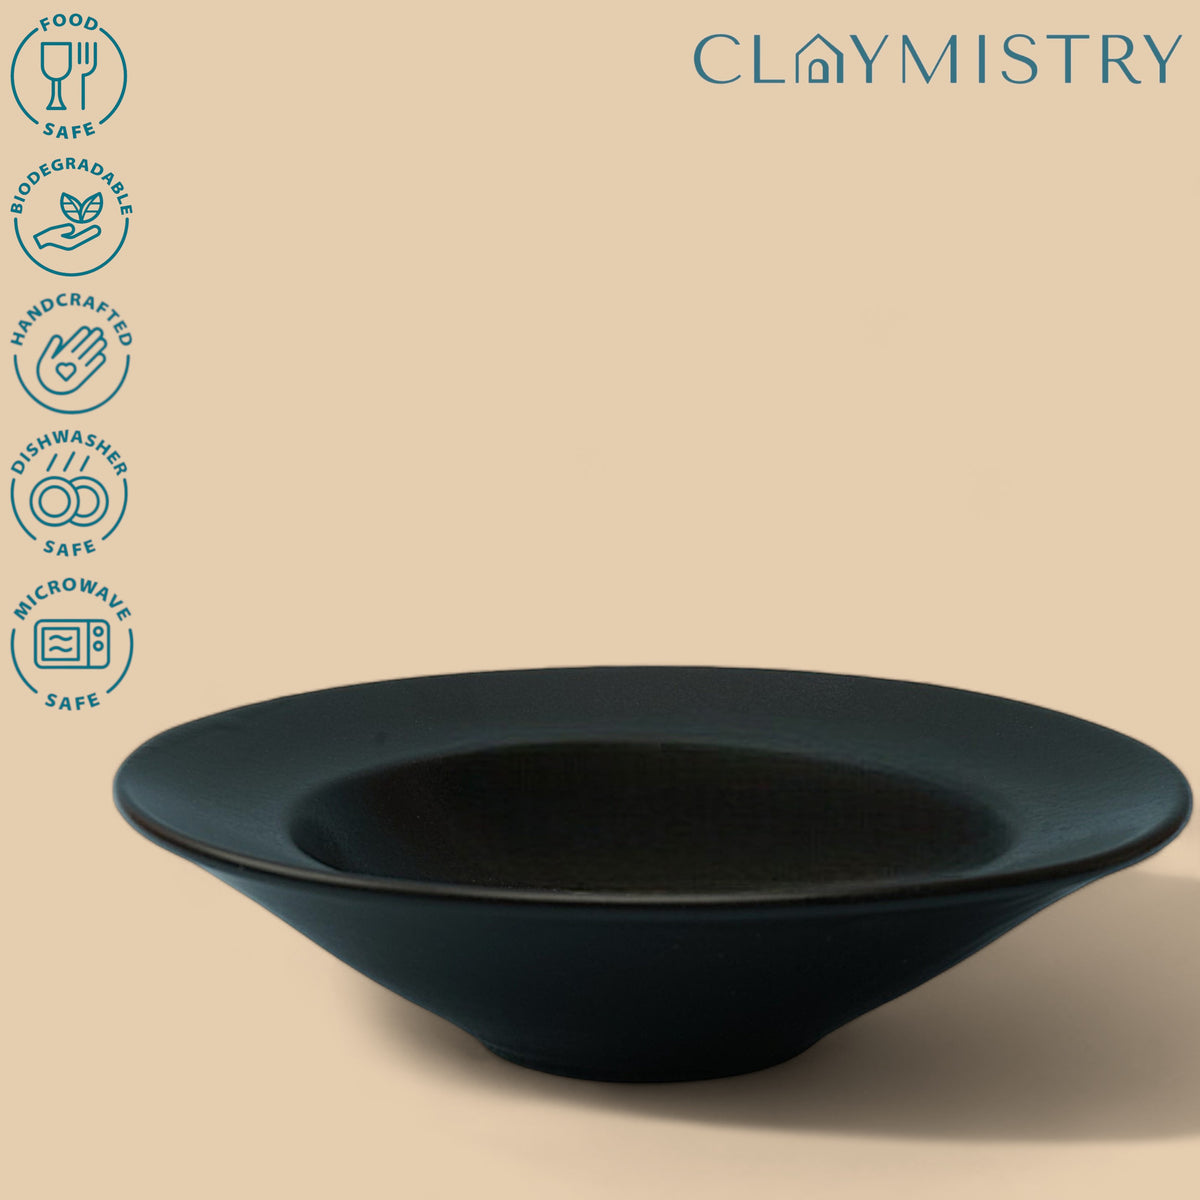 Claymistry Multi Utility Ceramic Dinner & Snacks Black Triangular Serving Plate, (24cm * 24cm * 6cm) Glossy | Dishwasher, Oven & Microwave Safe | Dinnerware Plate Thali Thupka Bowl | Premium Crockery